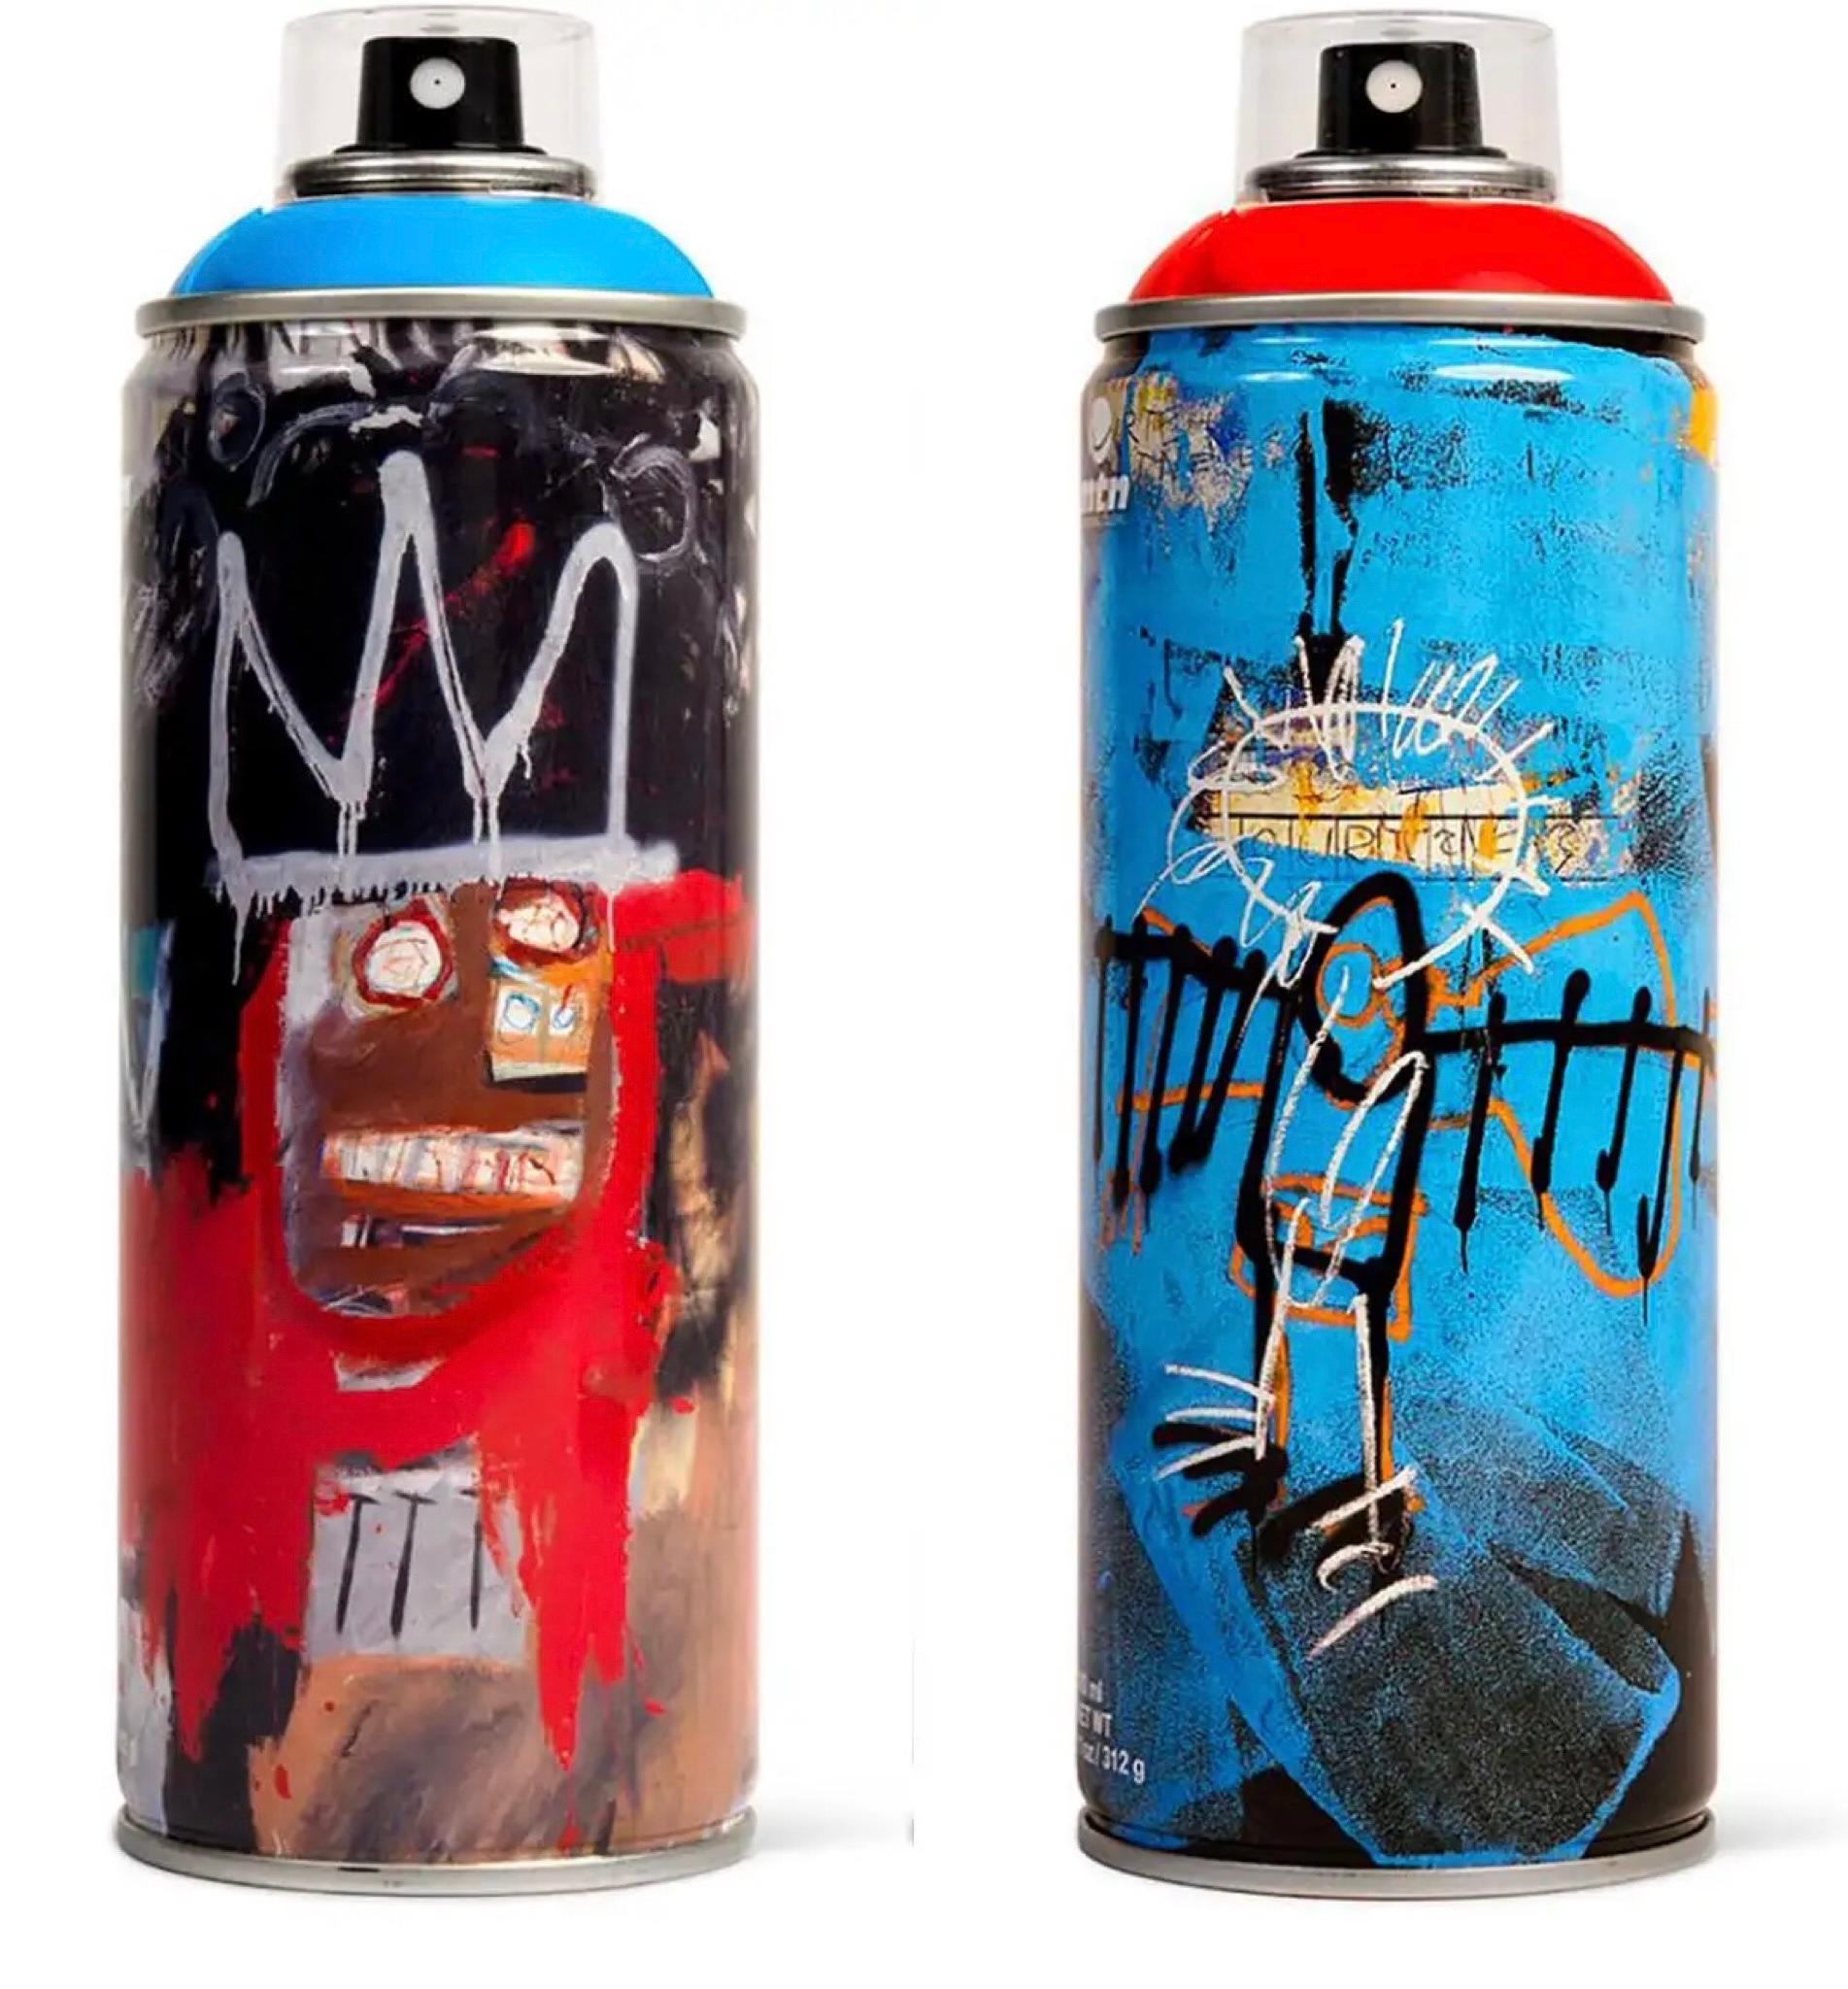 Jean-Michel Basquiat Spray Paint Cans 2017